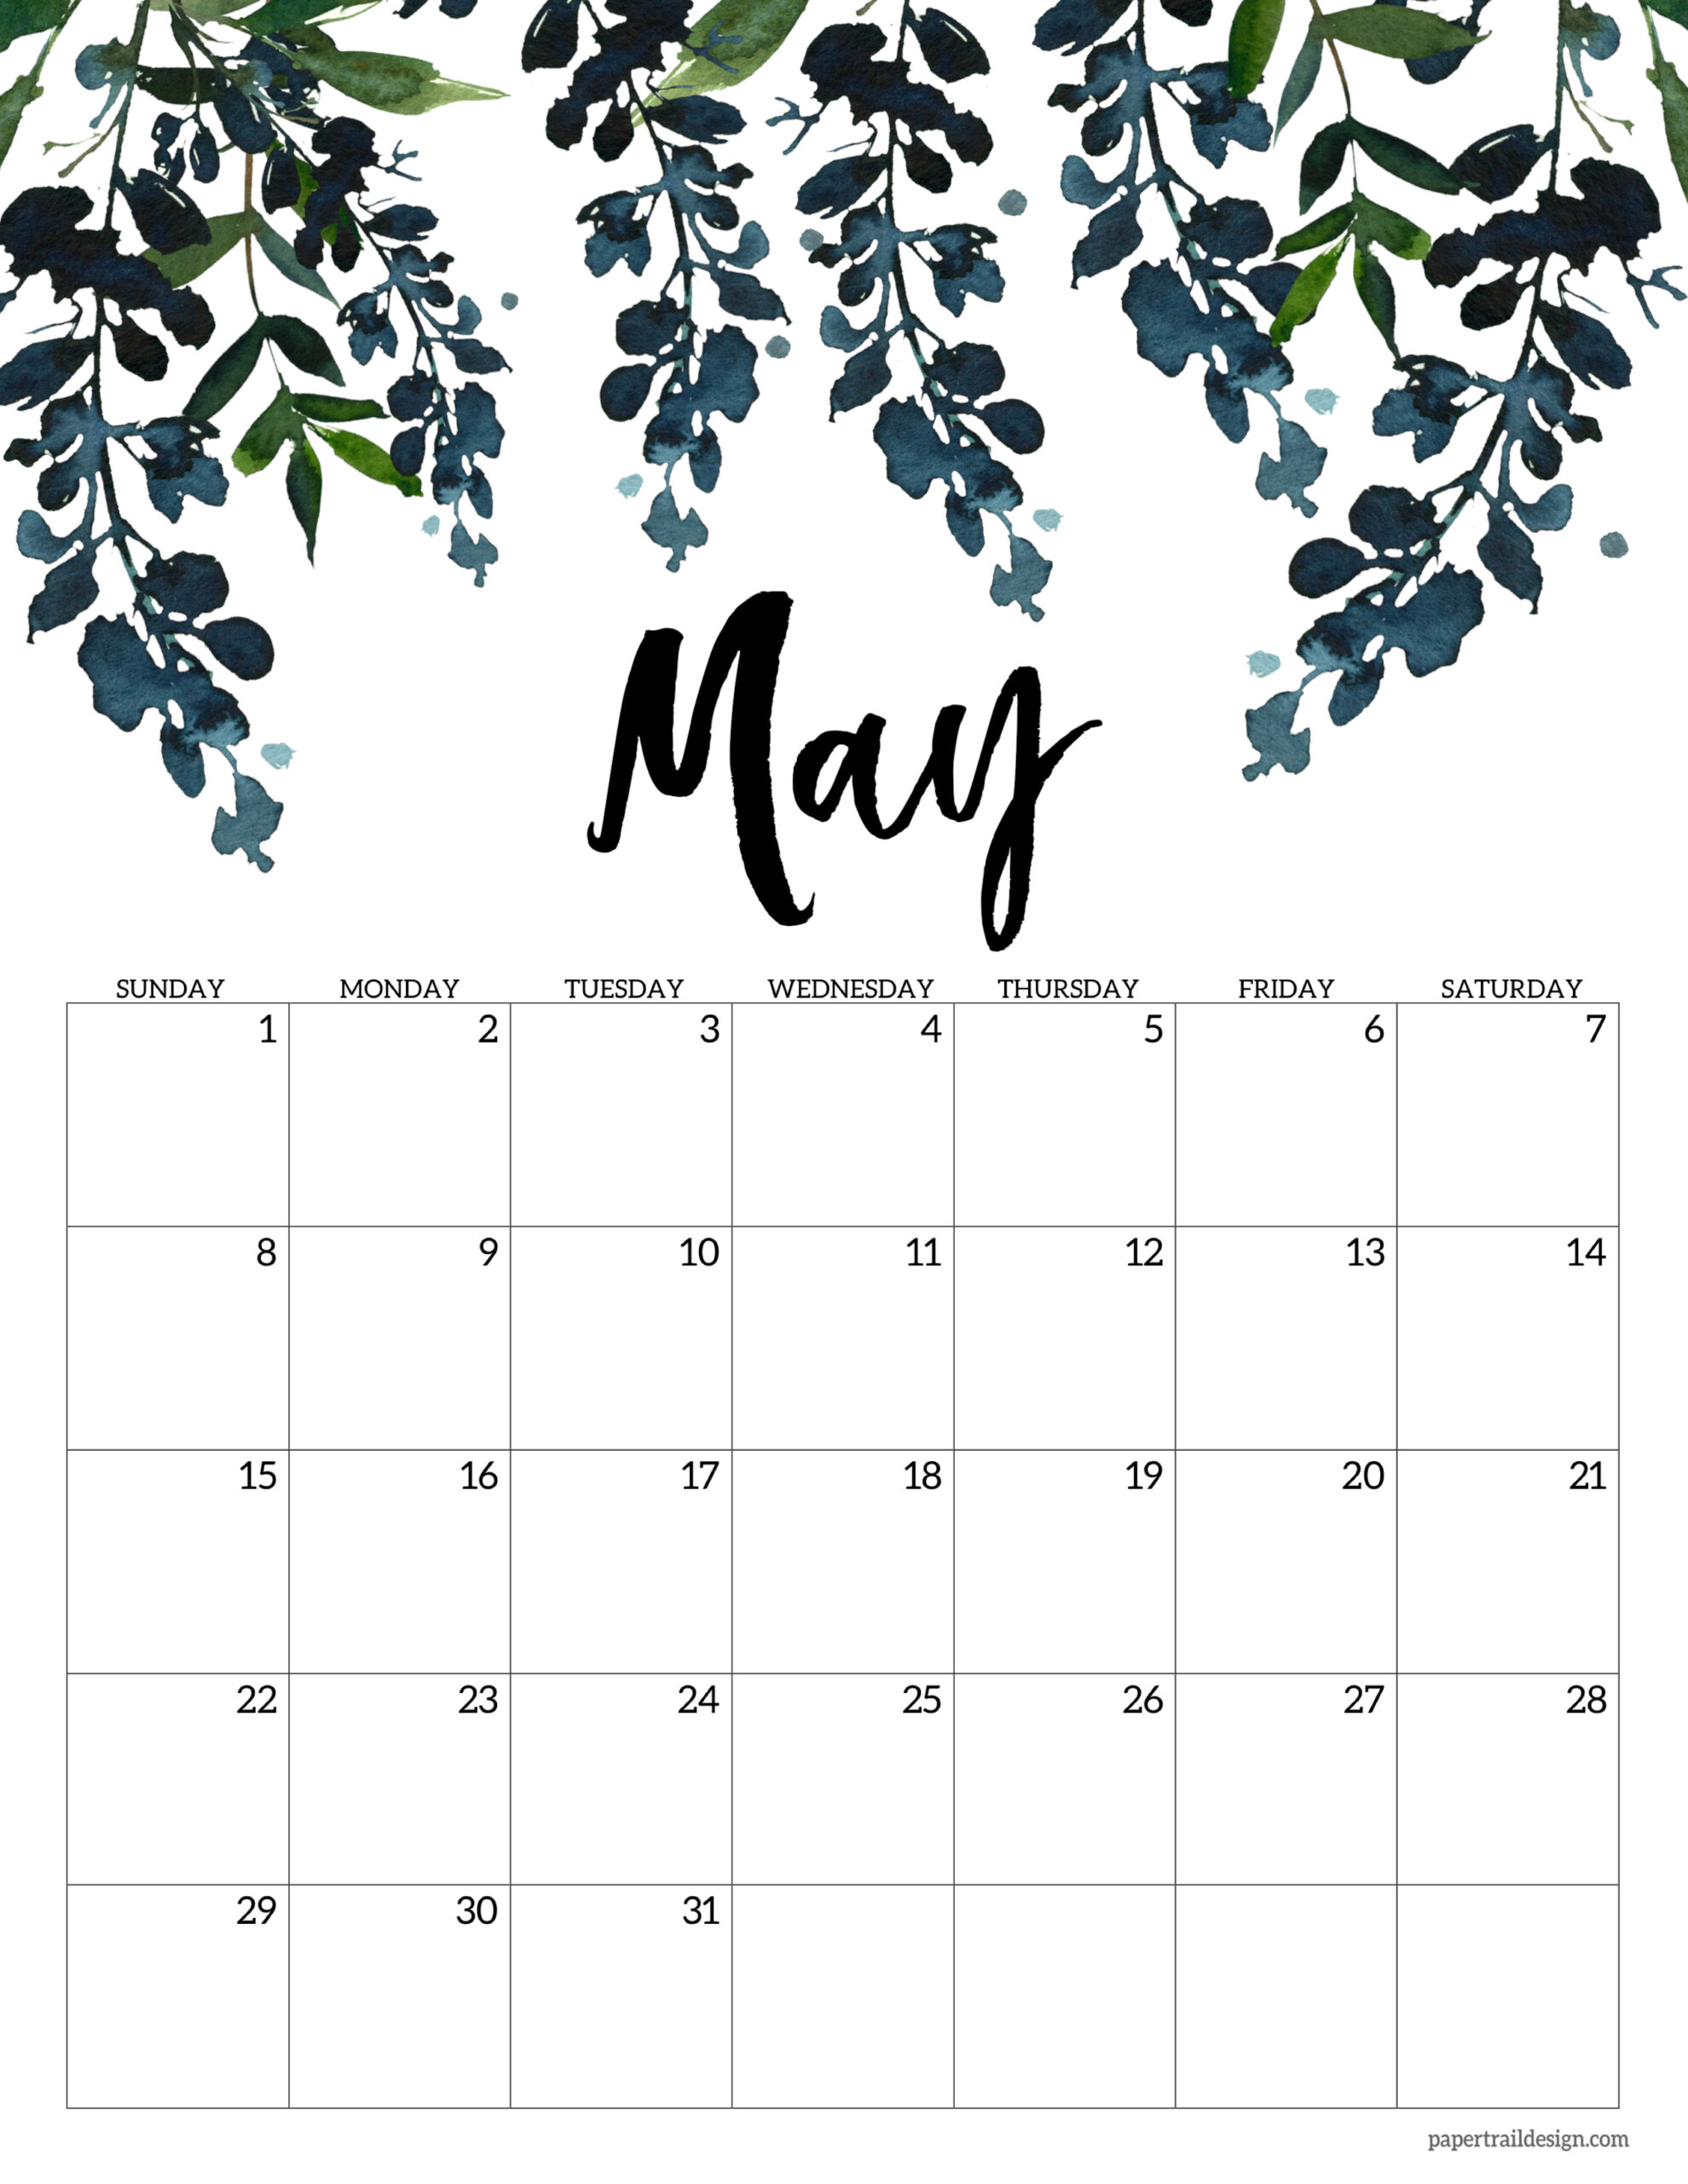 May 2022 Calendar Images Free 2022 Calendar Printable - Floral - Paper Trail Design